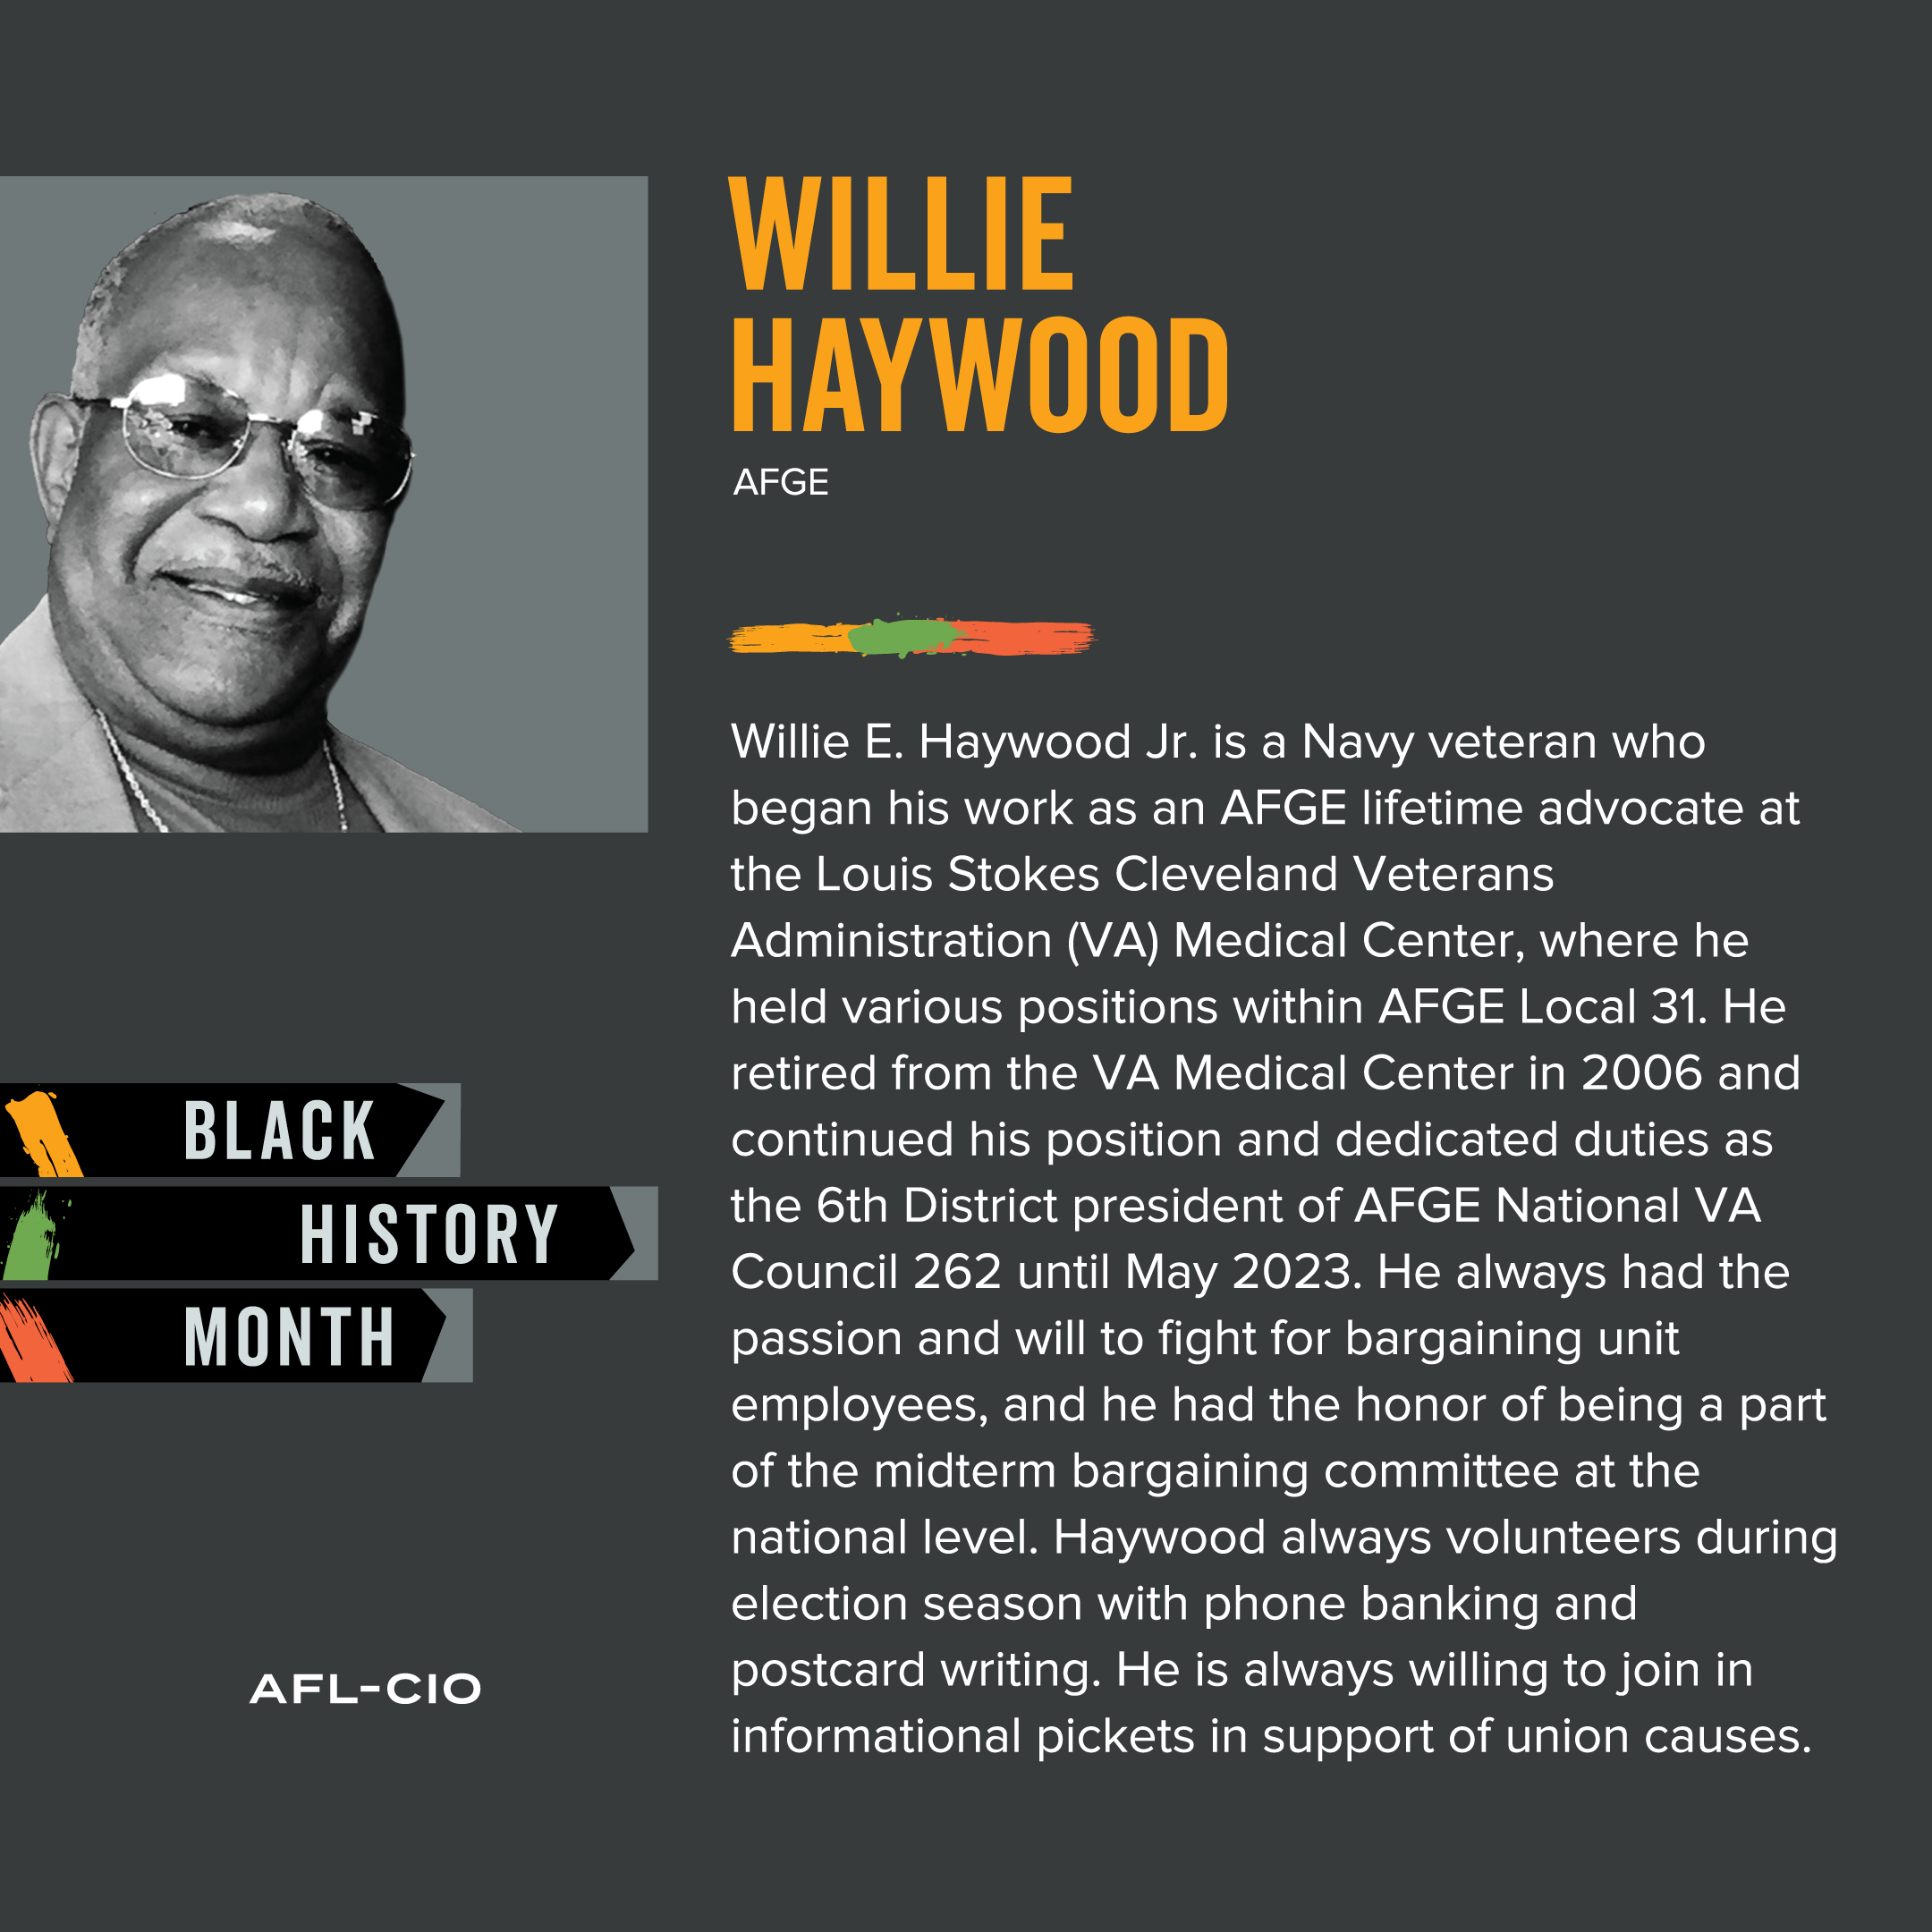 Black History Month Profiles: Willie E. Haywood